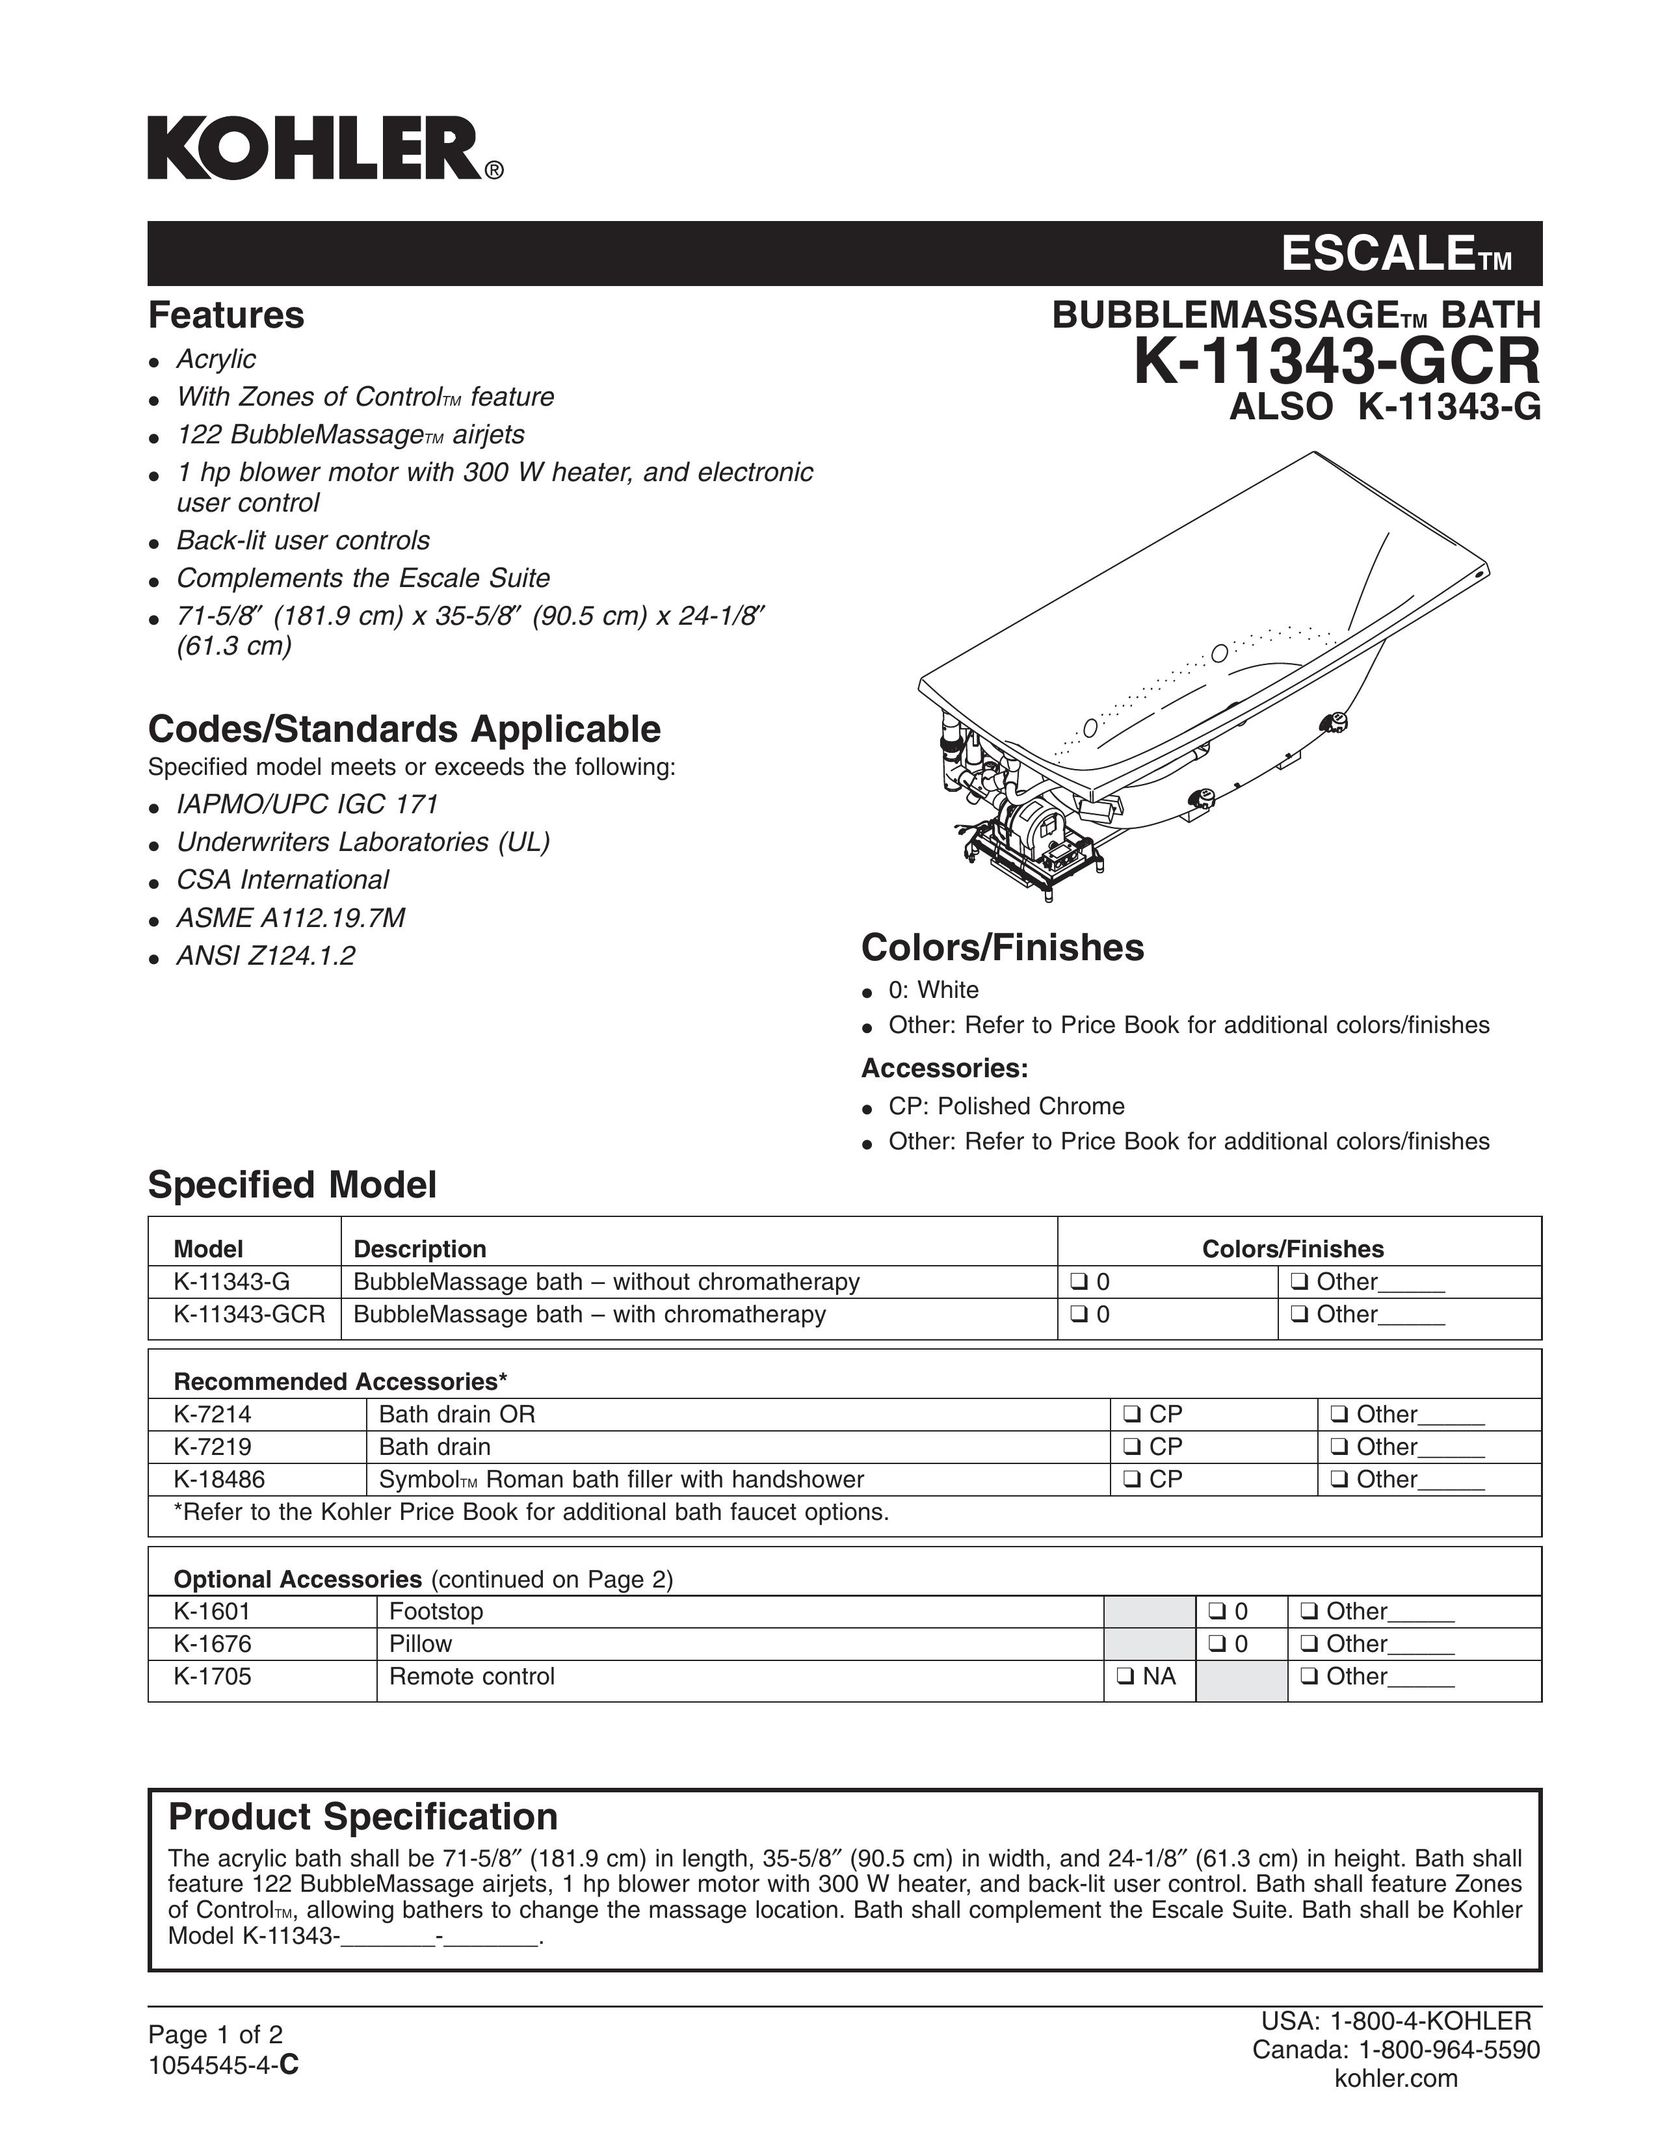 Kohler K-11343-G Plumbing Product User Manual